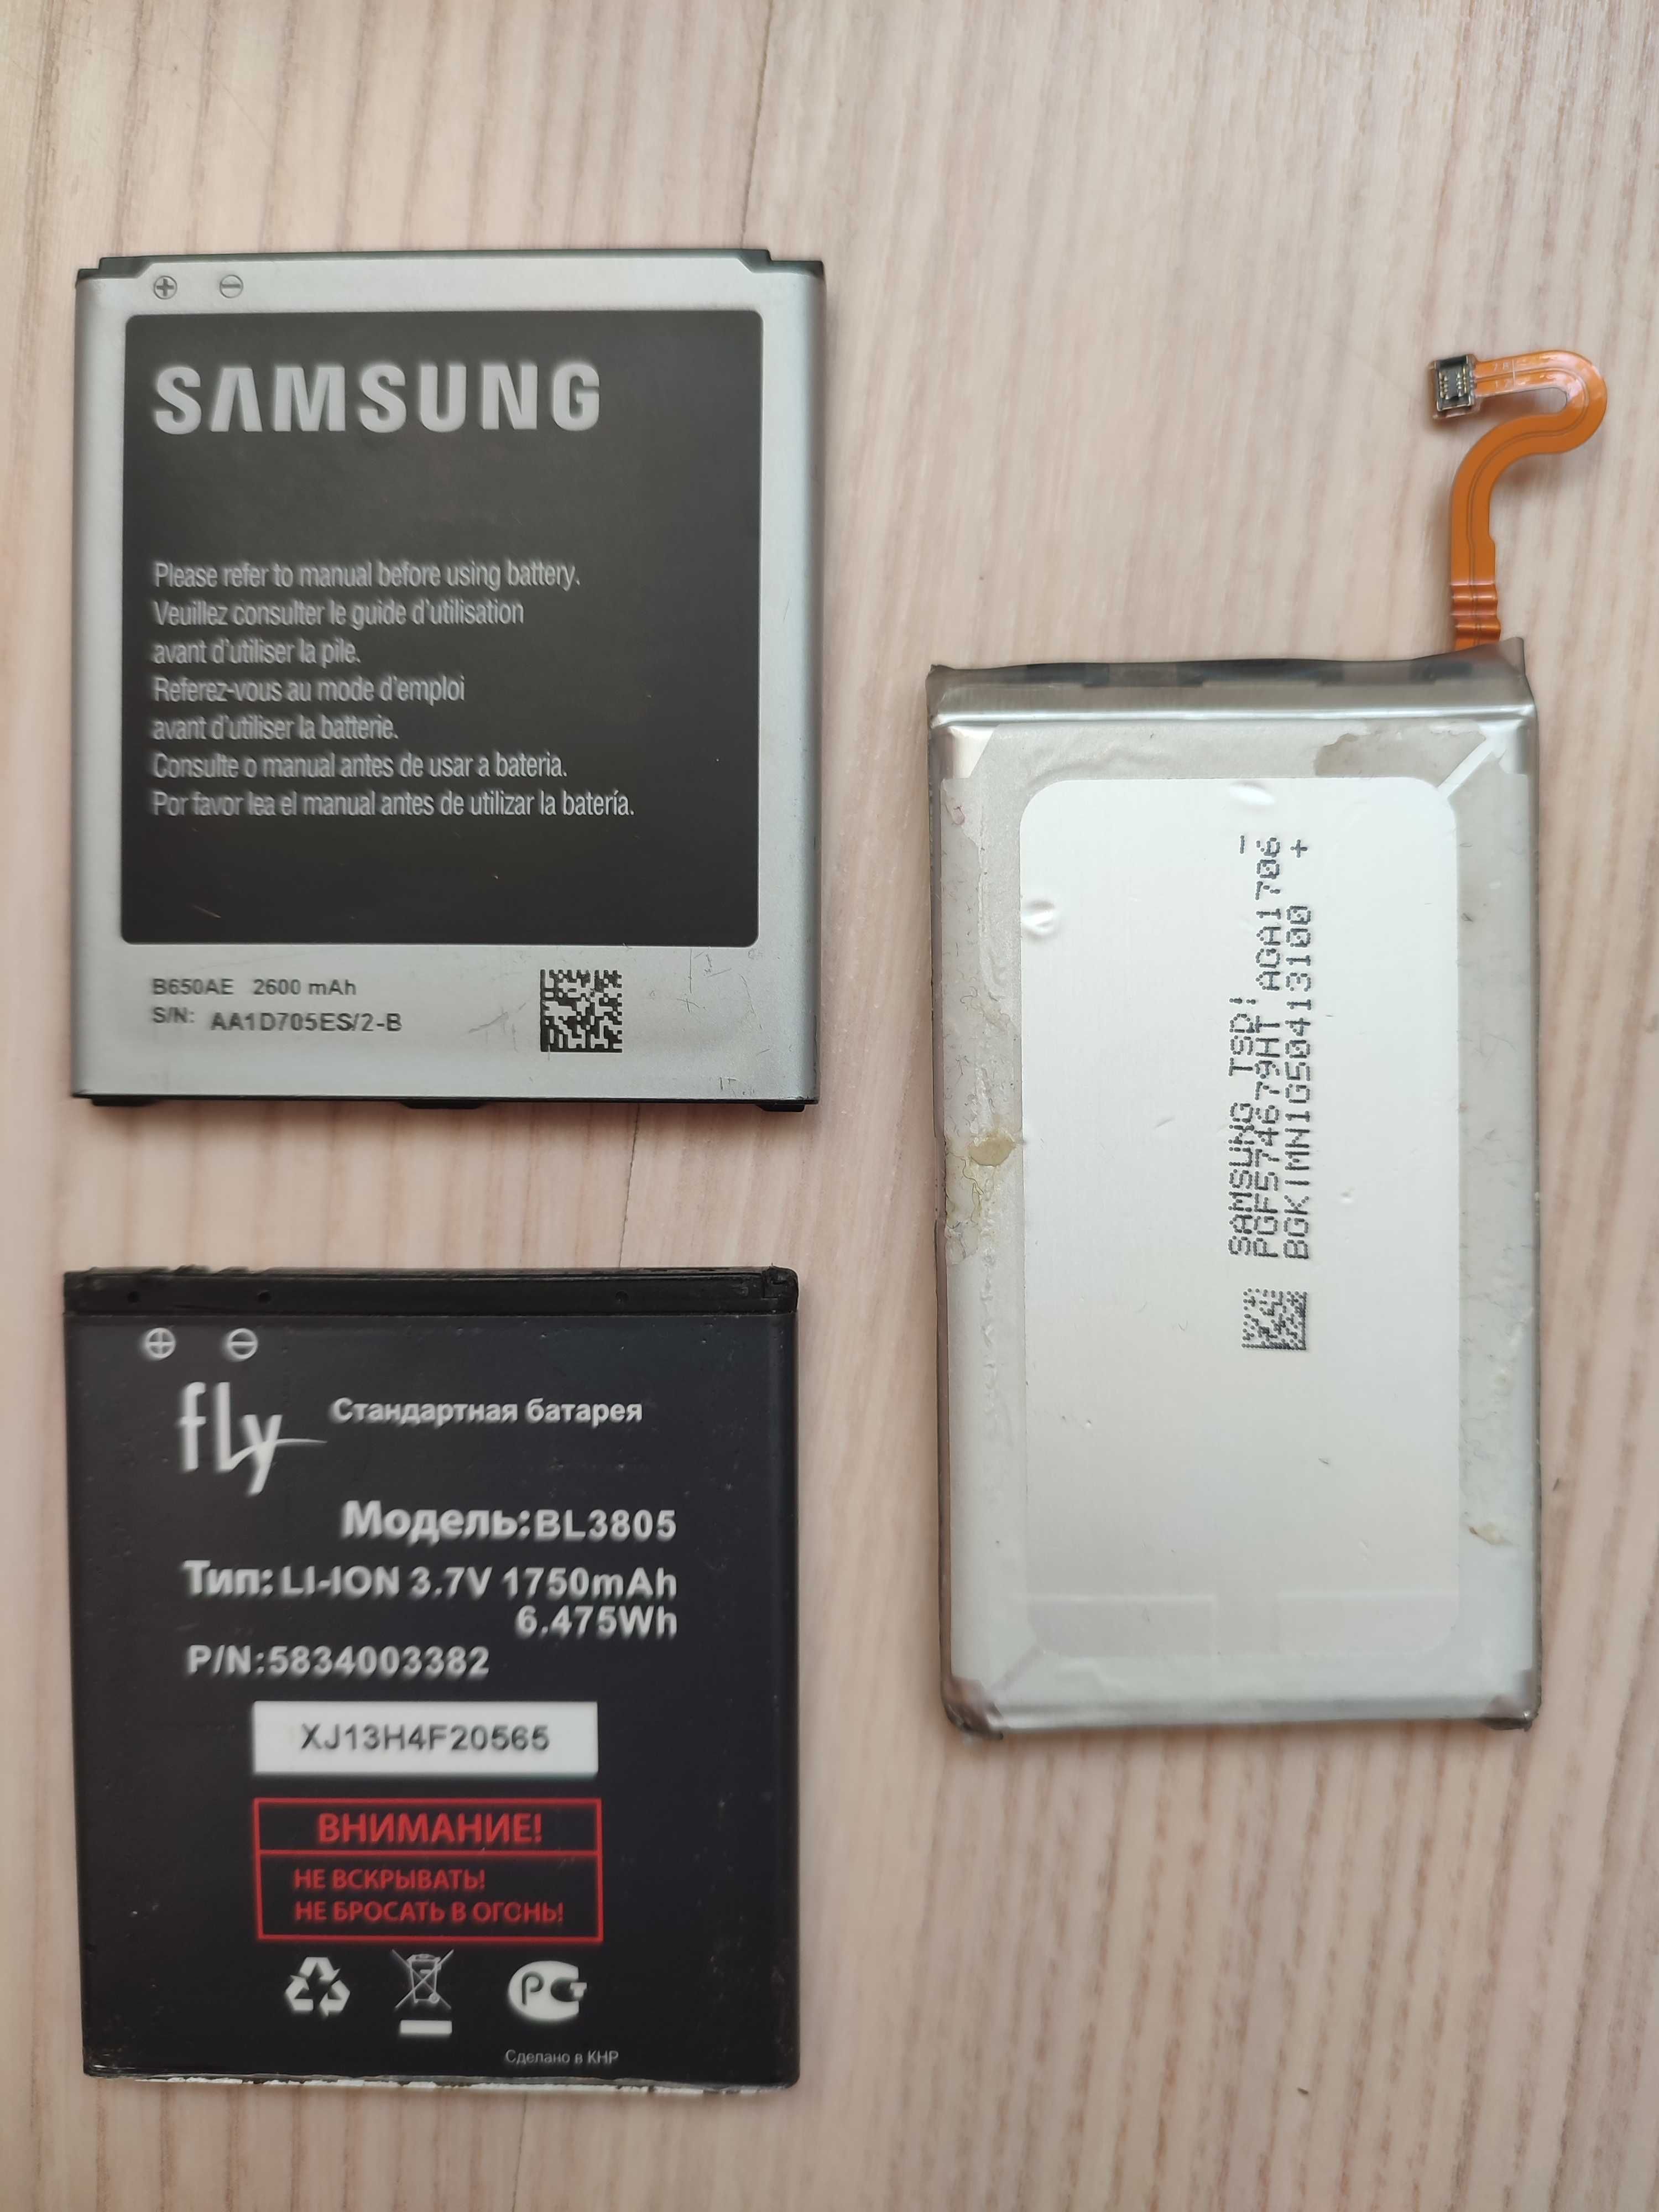 Акумуляторна батарея Samsung EB-BG965ABE, Samsung B650AE, Fly BL3805